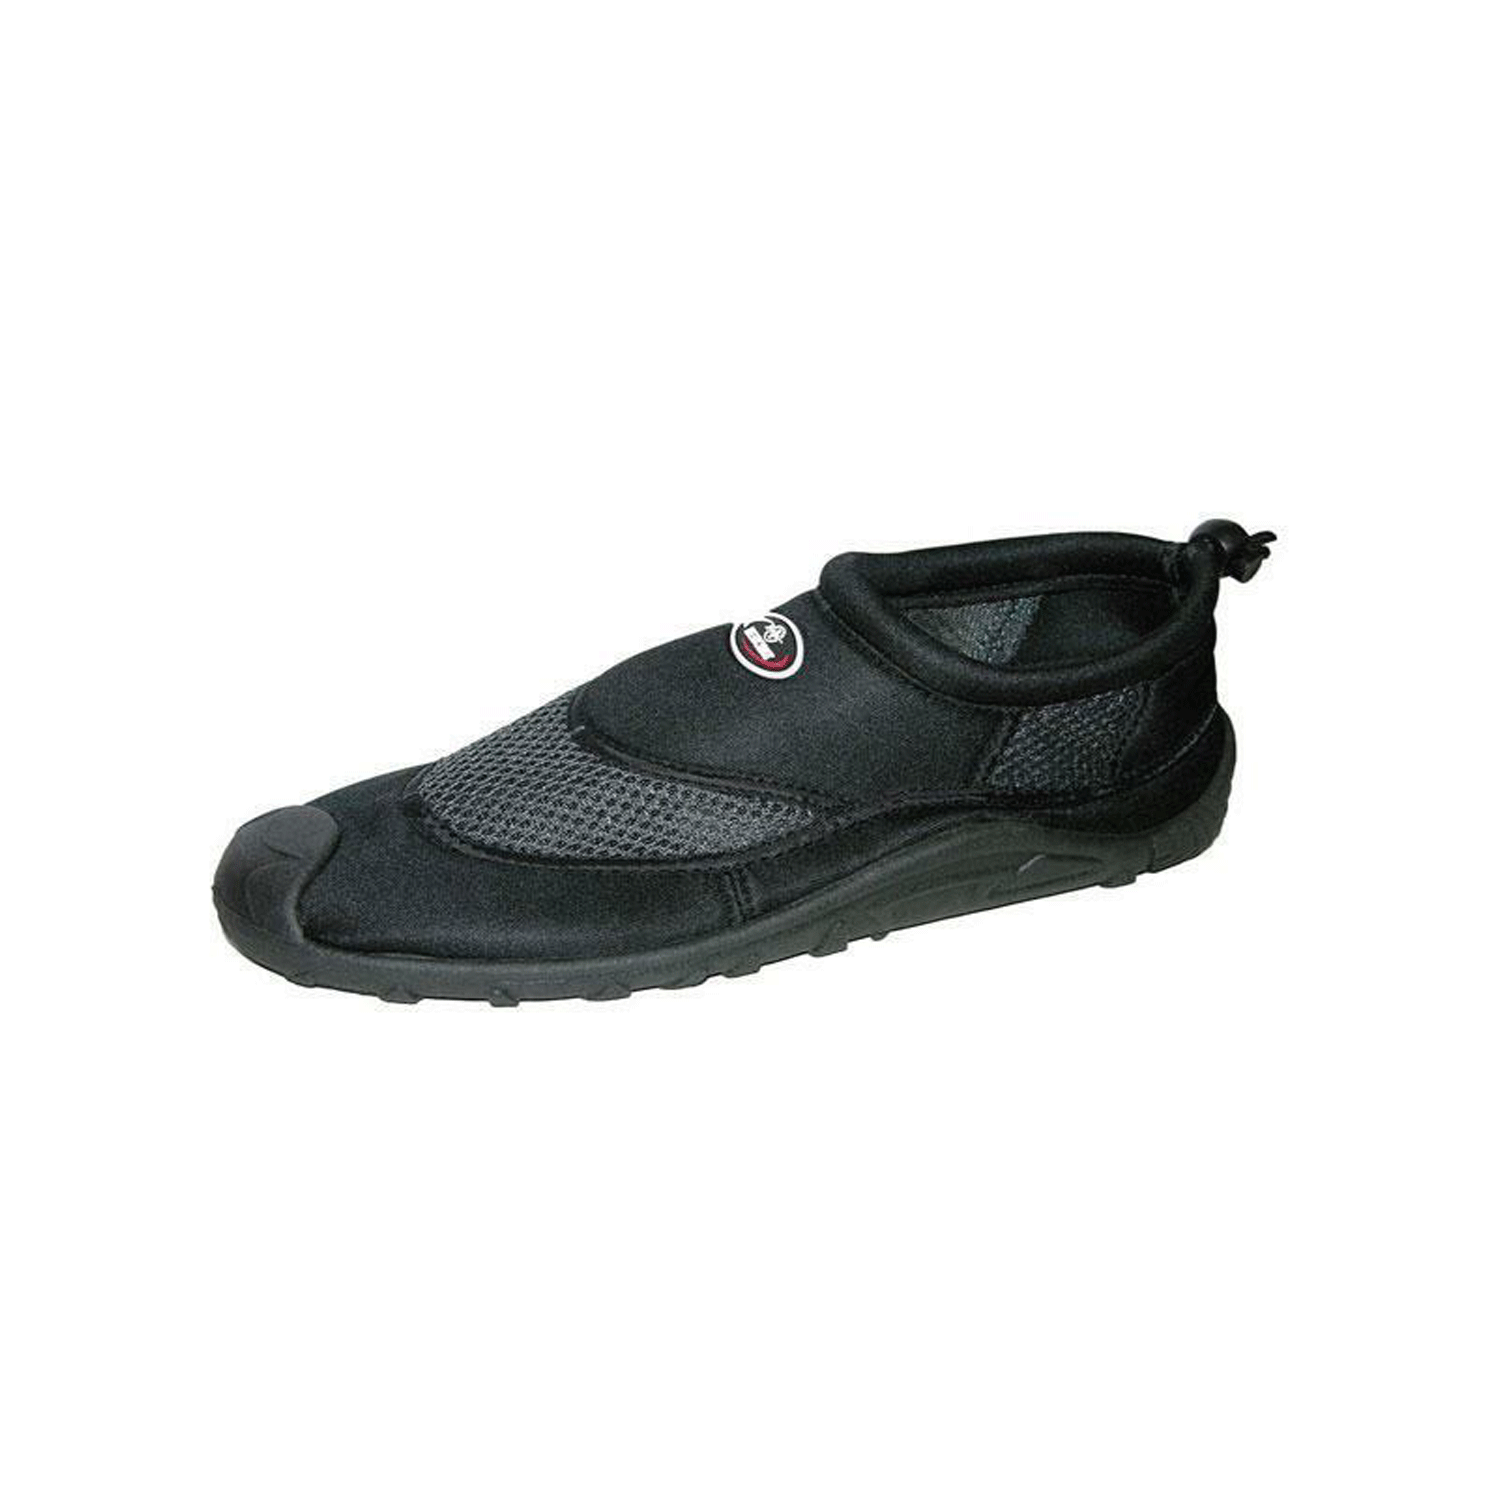 Beuchat - Beach Shoes - Black